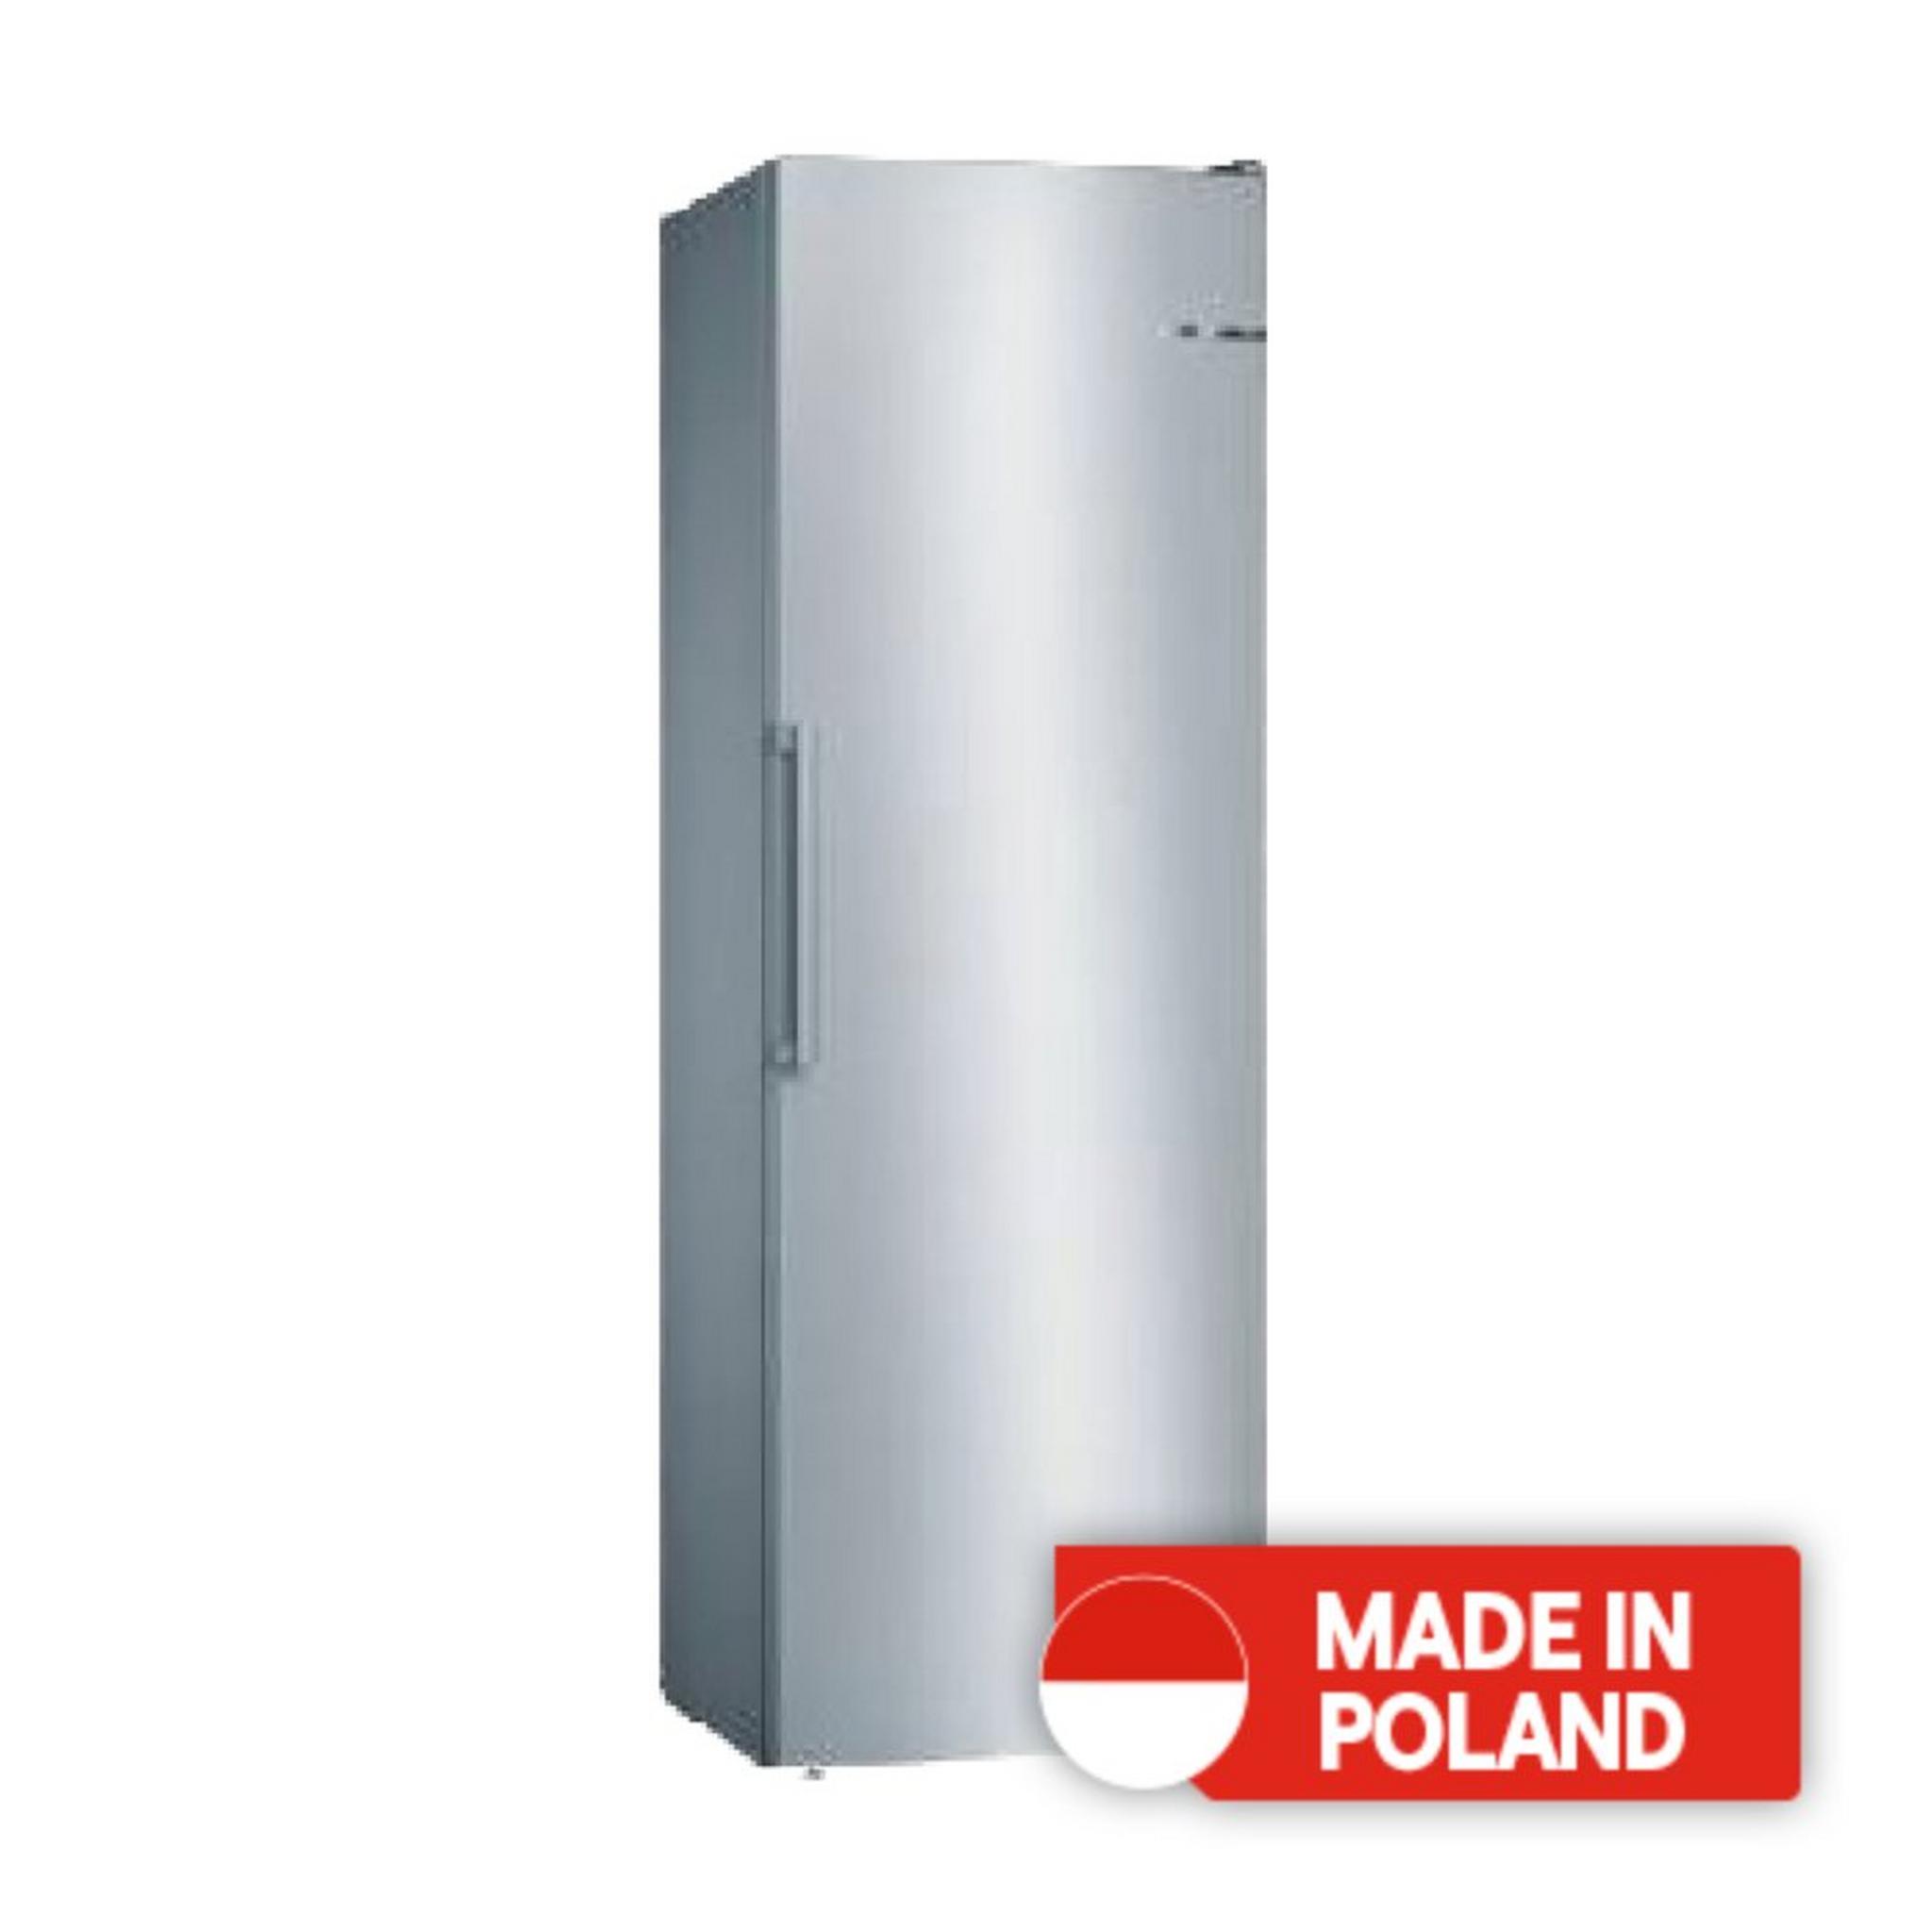 Bosch 9 Cft. Upright Freezer (GSN36VL3PG) – Stainless Steel